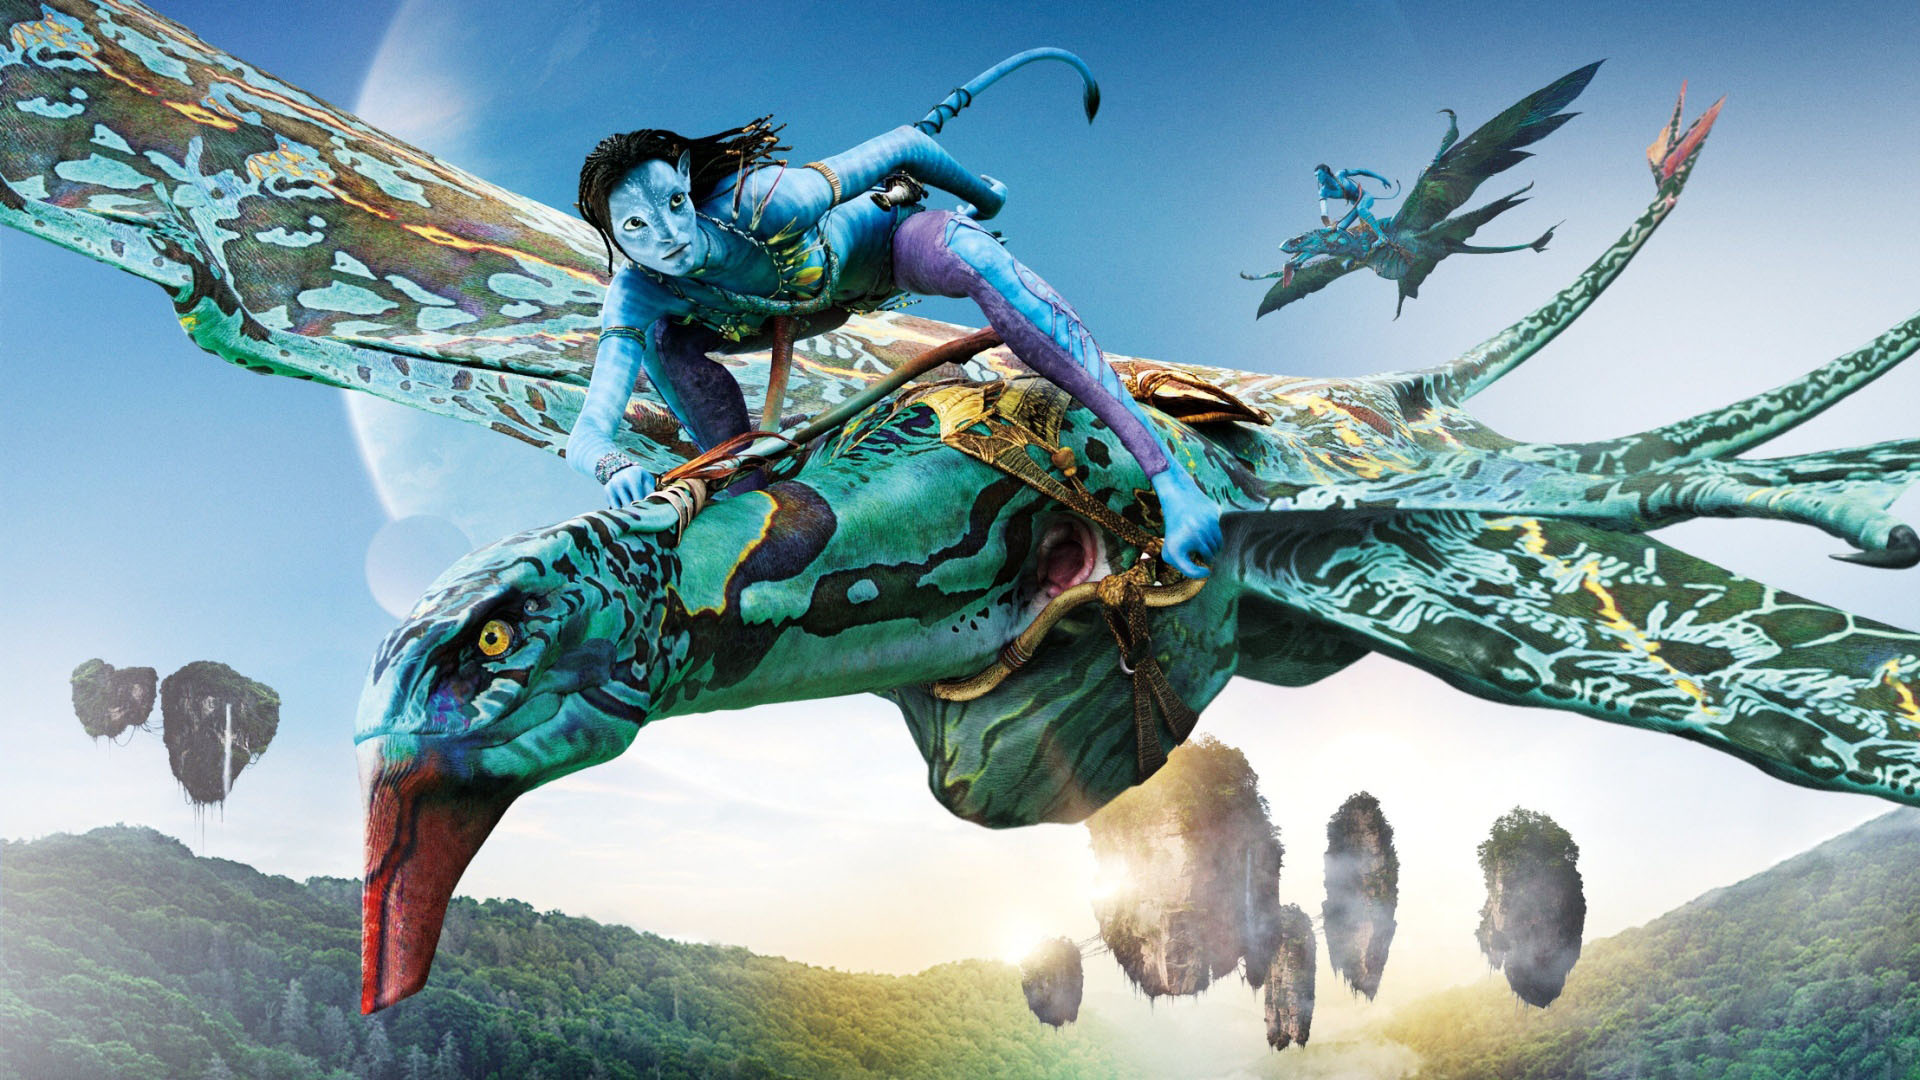  'Avatar' VFX Movie